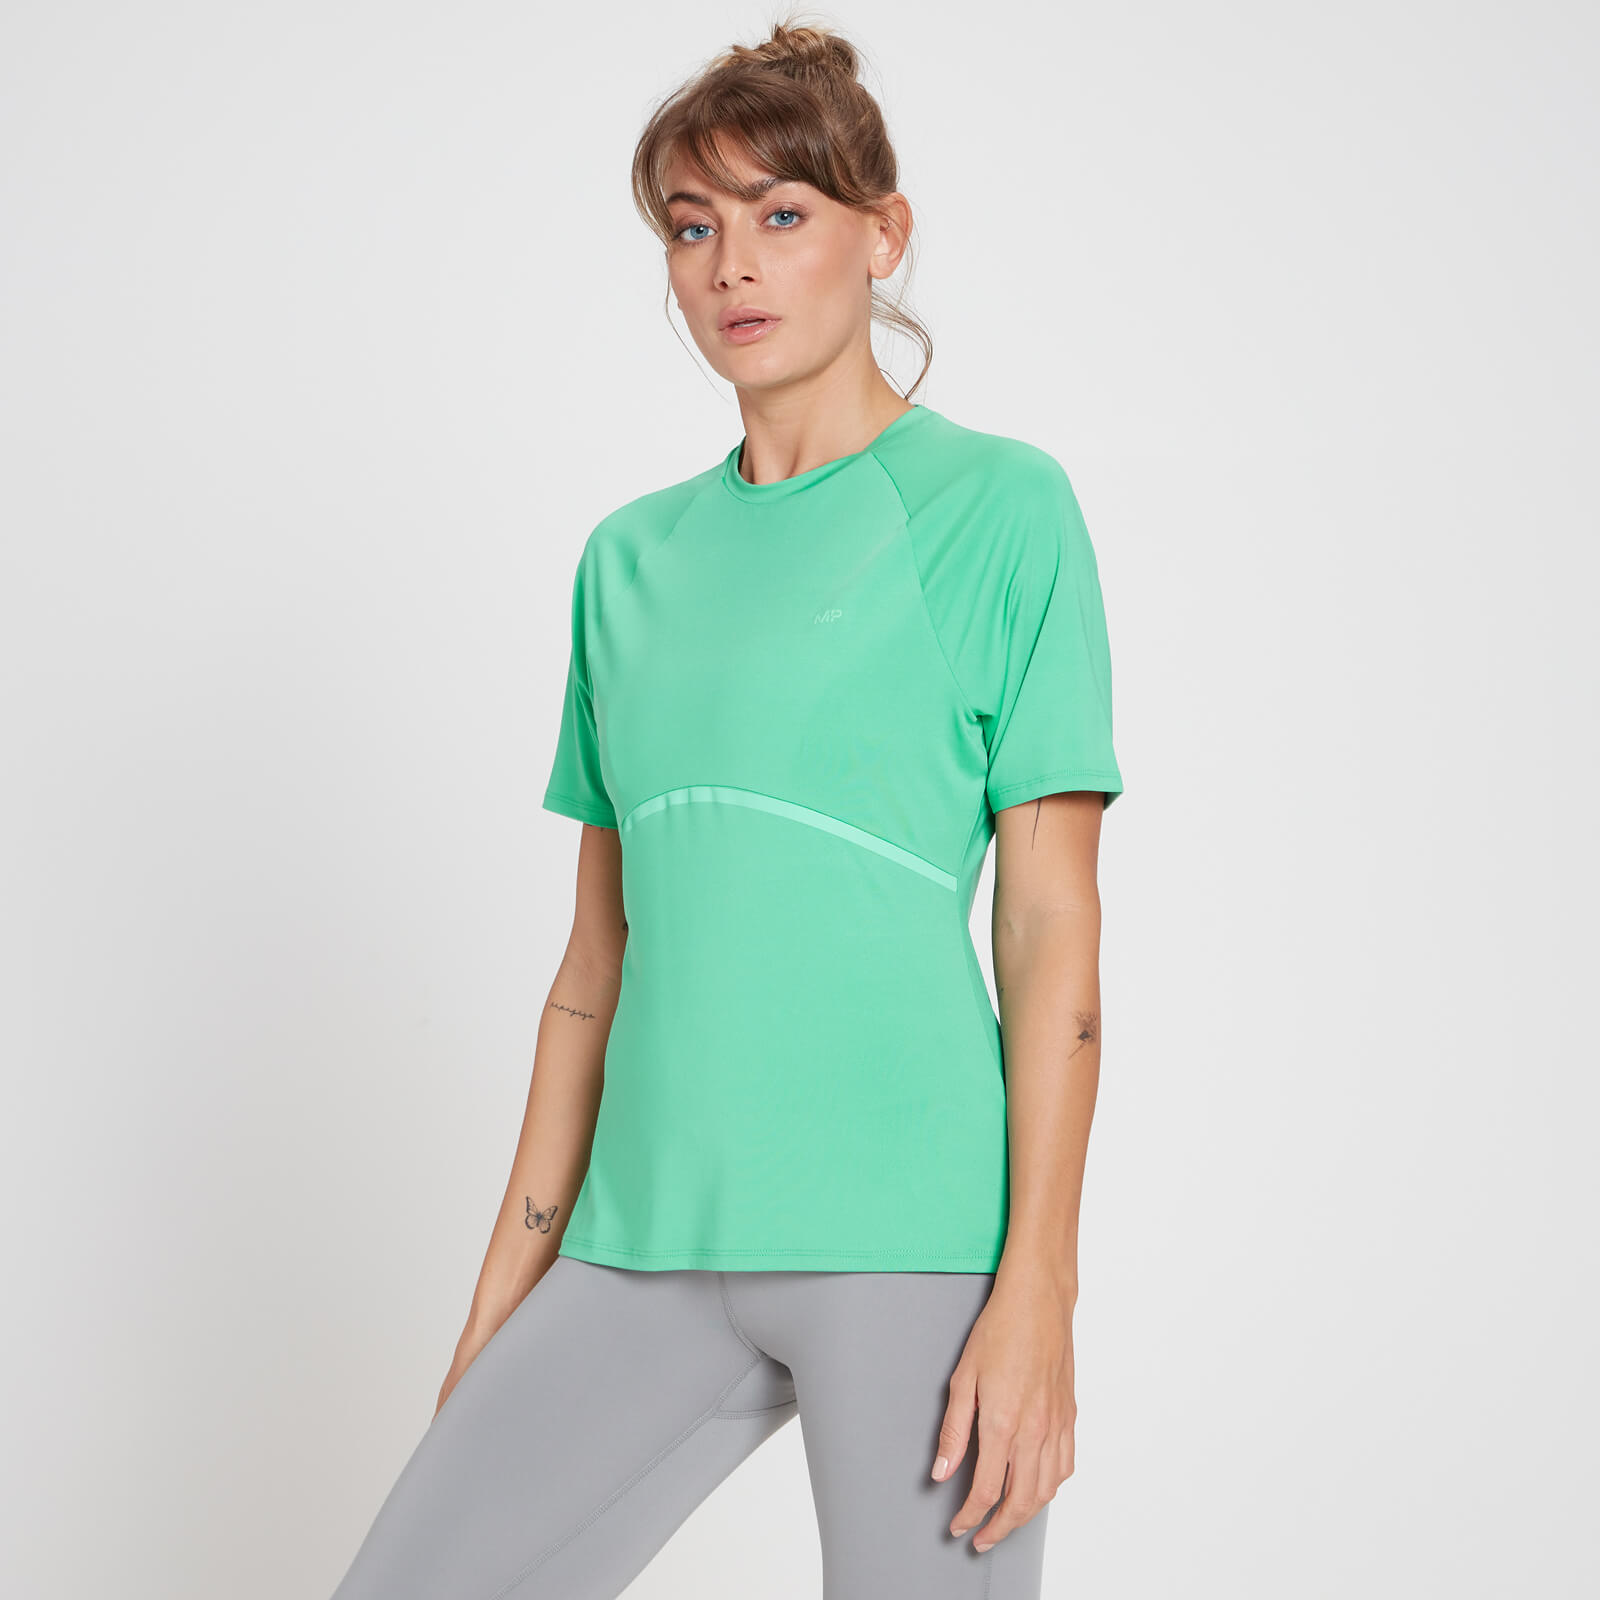 MP Women's Velocity Ultra Reflective T-Shirt - Ice Green  - M